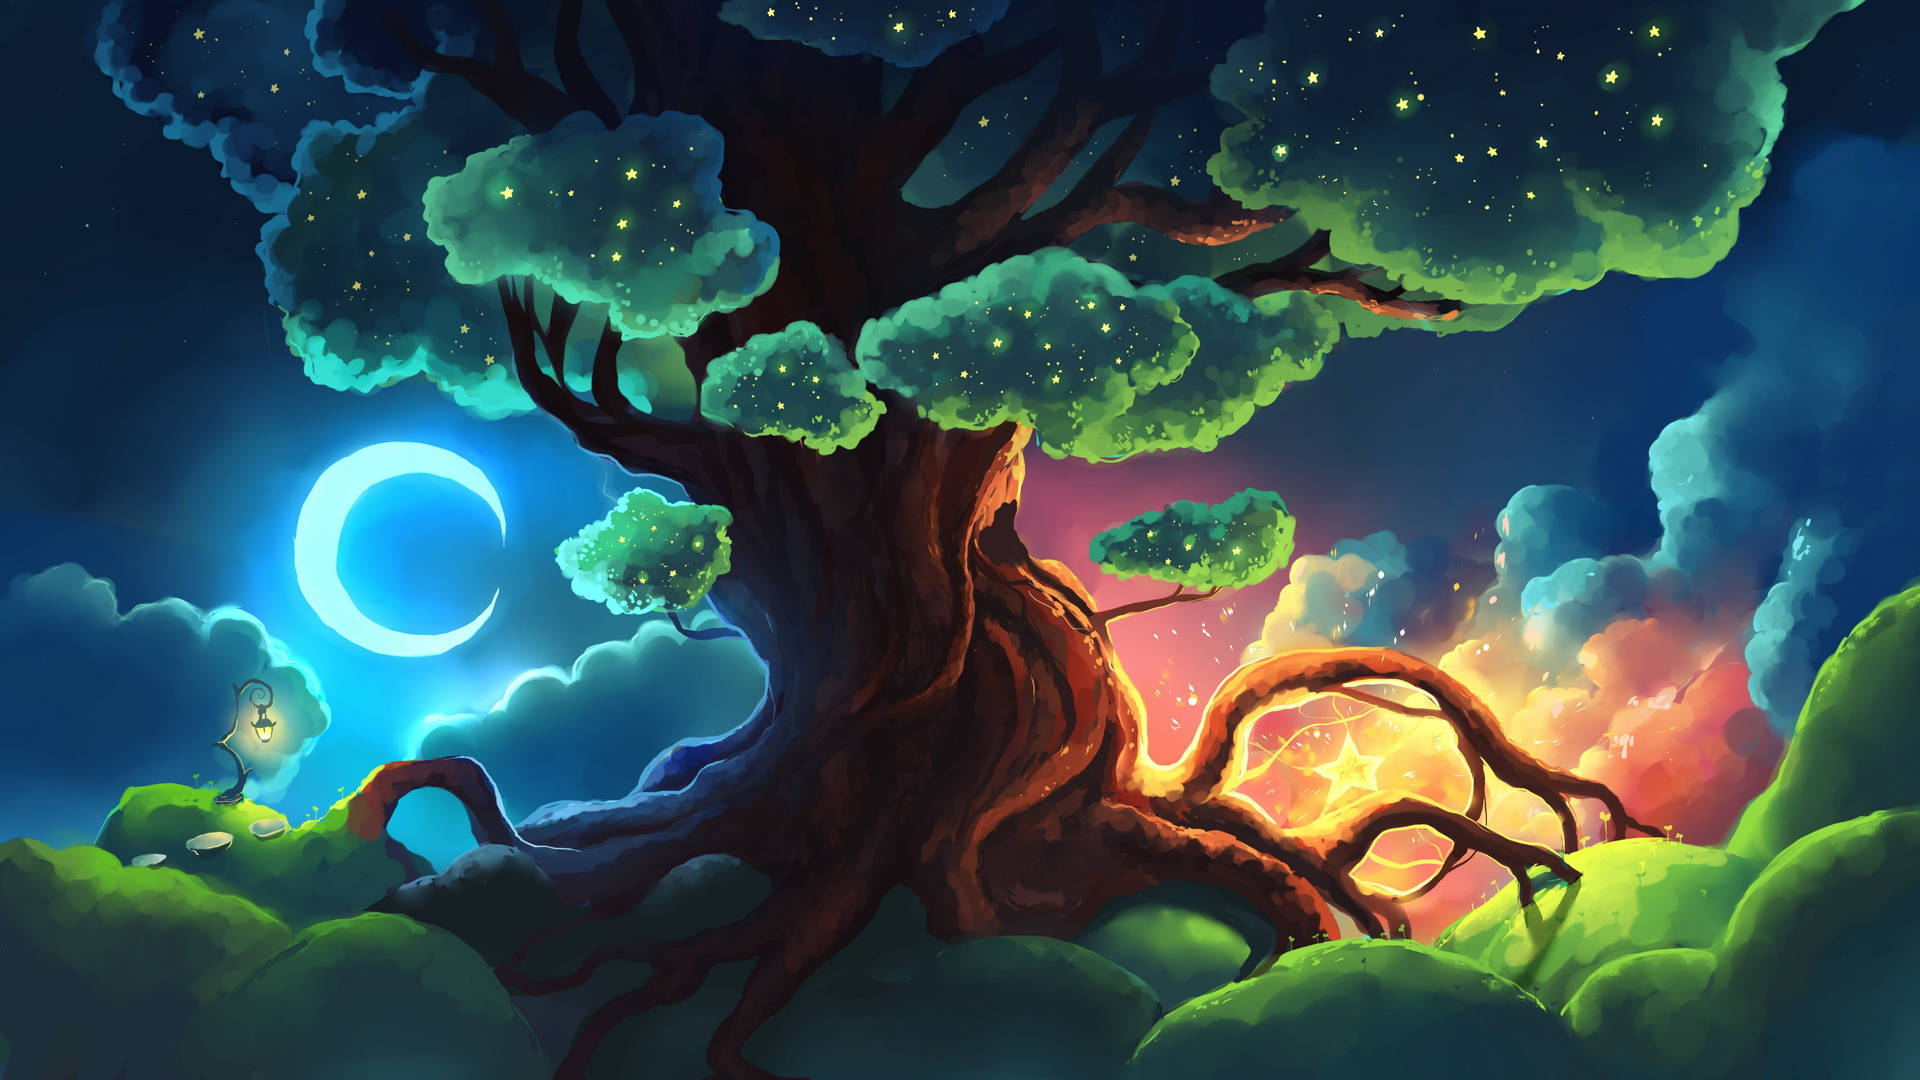 Artsy Graphic Moonlight 4k With Tree Wallpaper